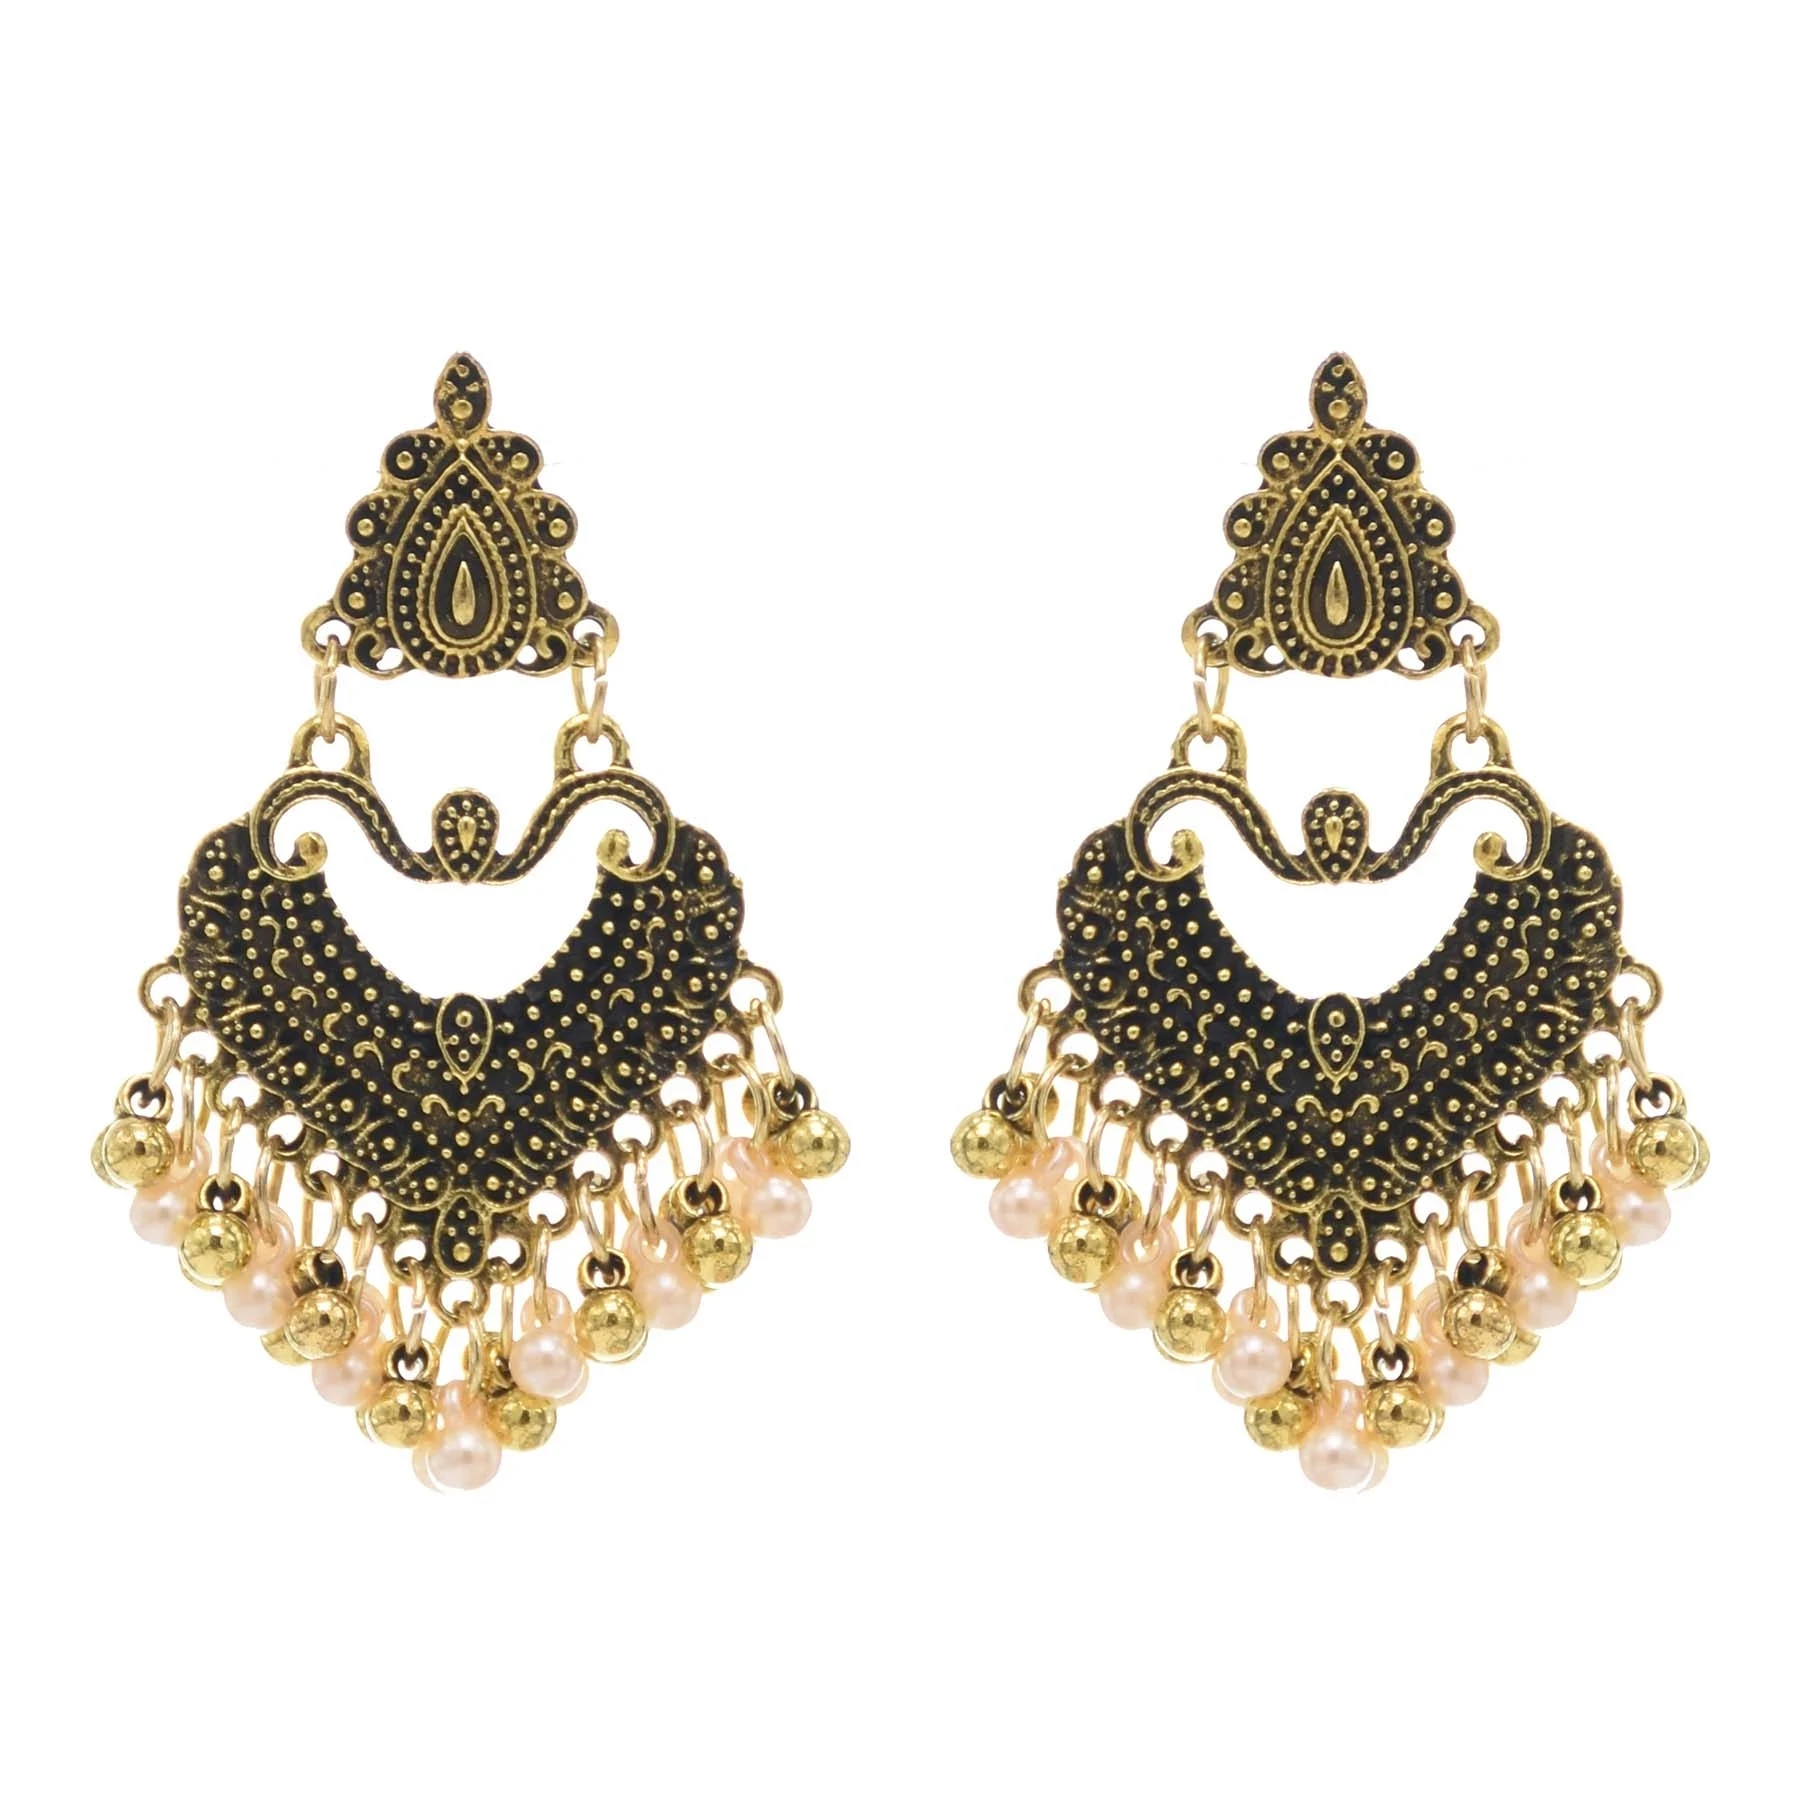 Oxidized Vintage Gold Handmade Ethnic Indian Jhumka Egypt Womens Earring Jewelry 